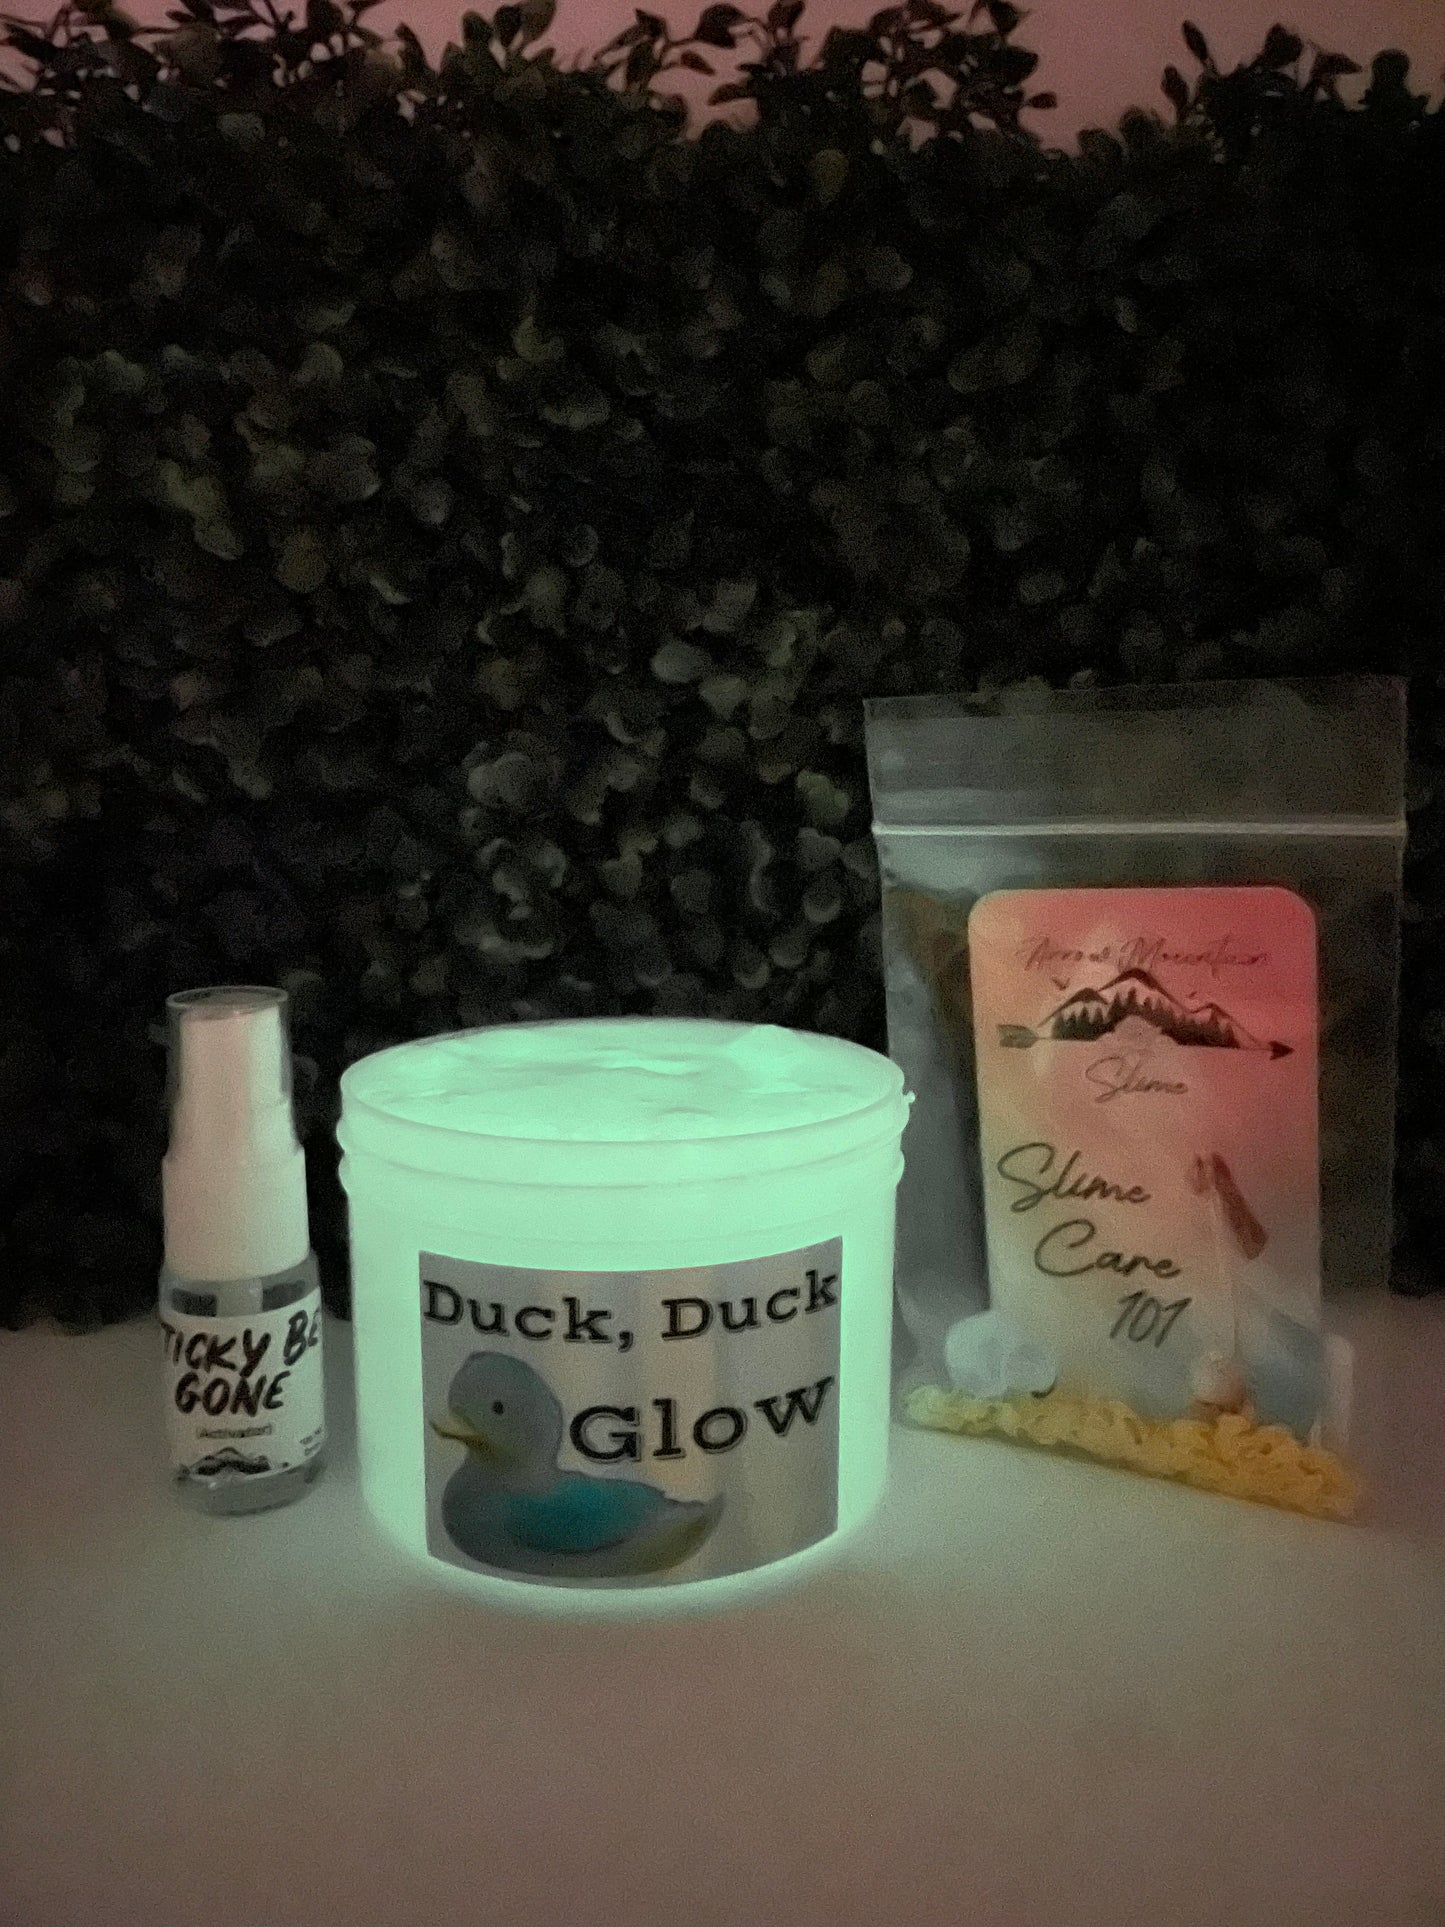 Duck Duck Glow